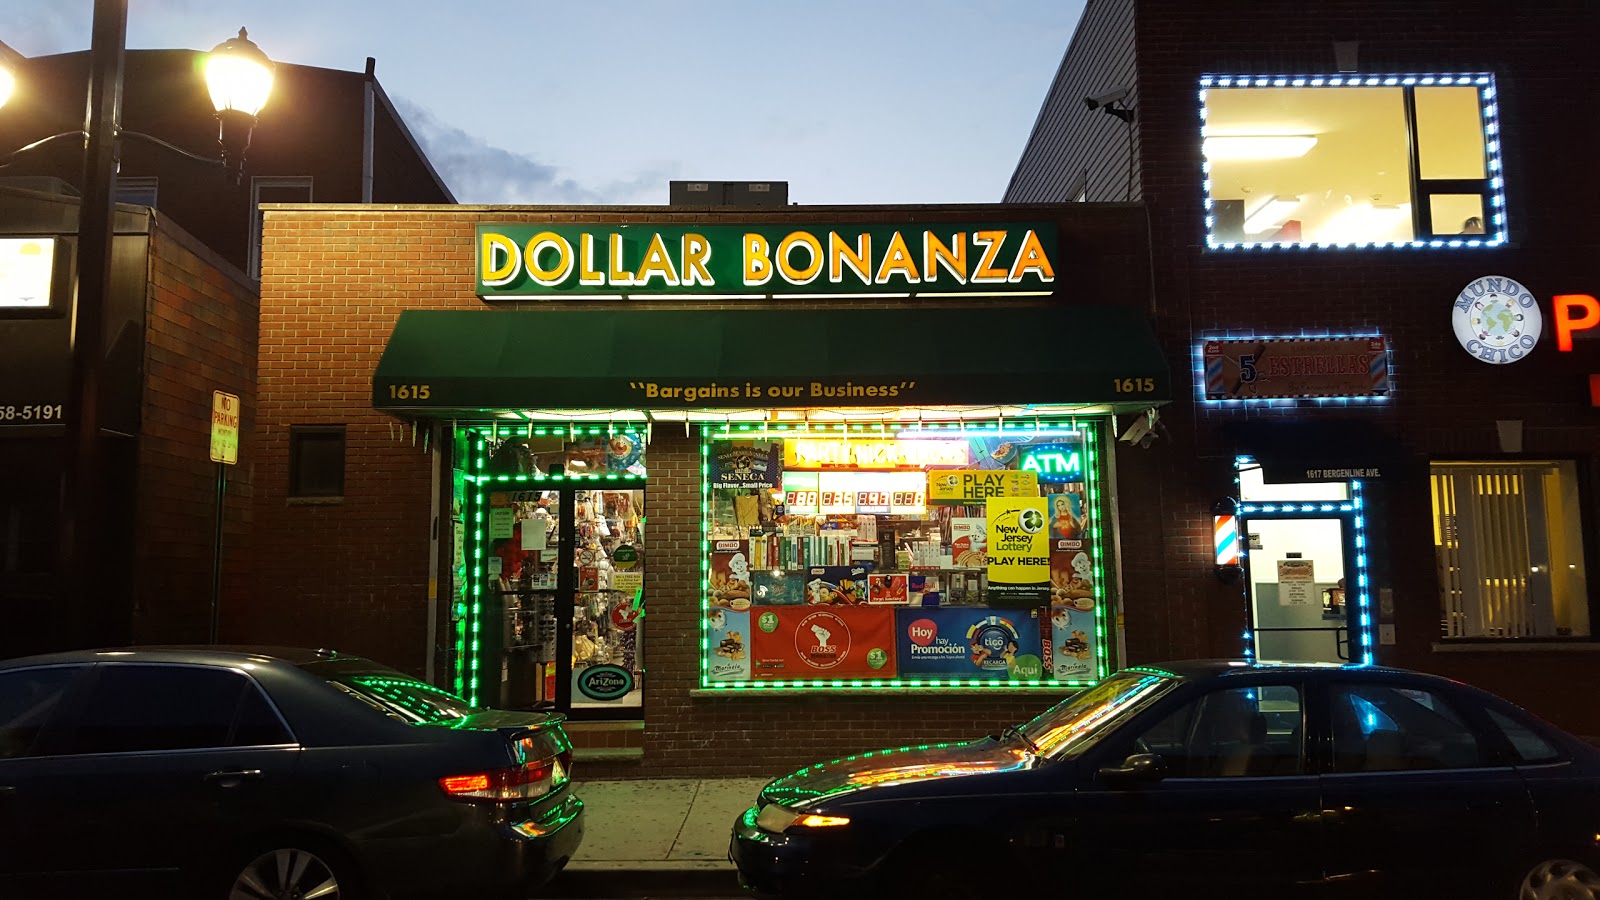 Photo of Dollar Bonanza Viva Corporation in Union City, New Jersey, United States - 2 Picture of Point of interest, Establishment, Store